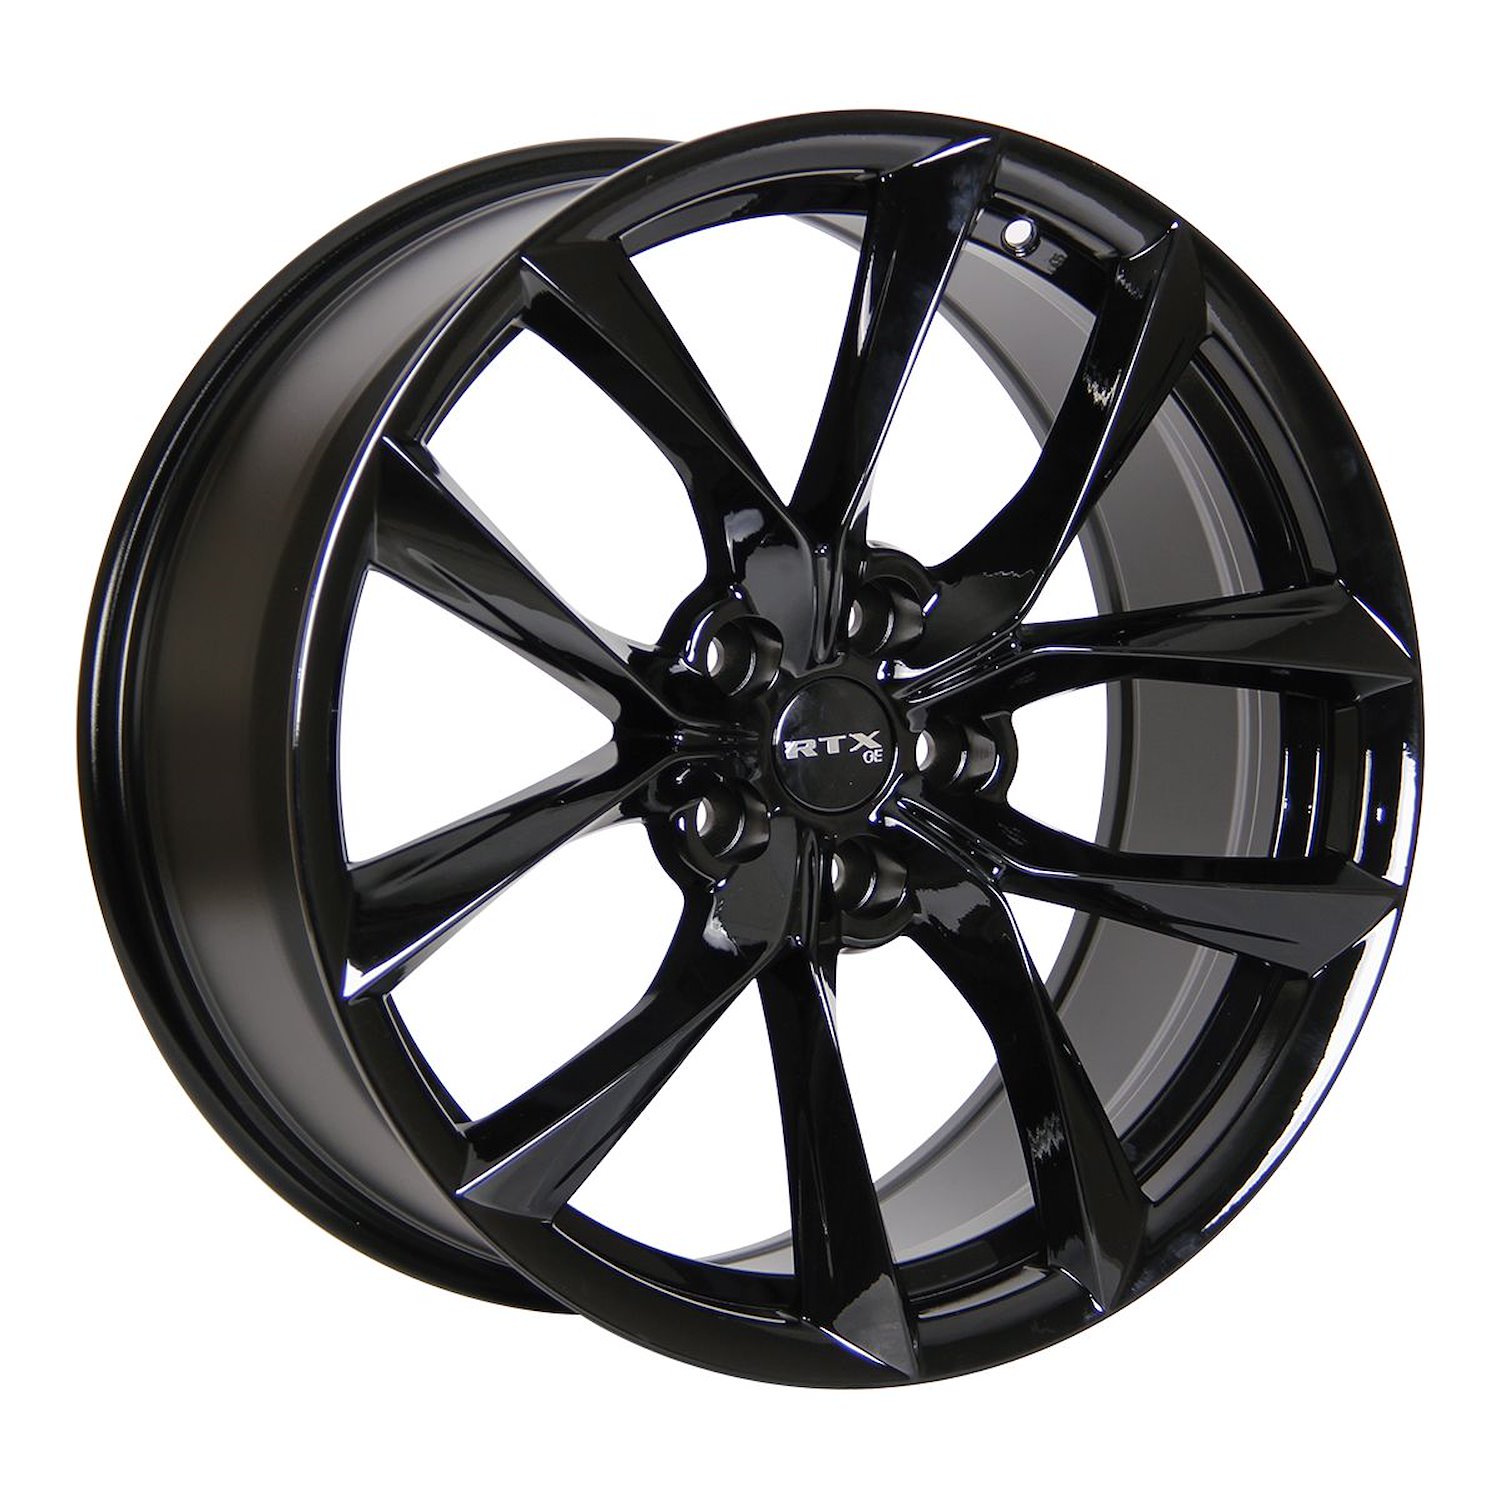 082735 OE-Series Spider Wheel [Size: 19" x 8.50"] Gloss Black Finish